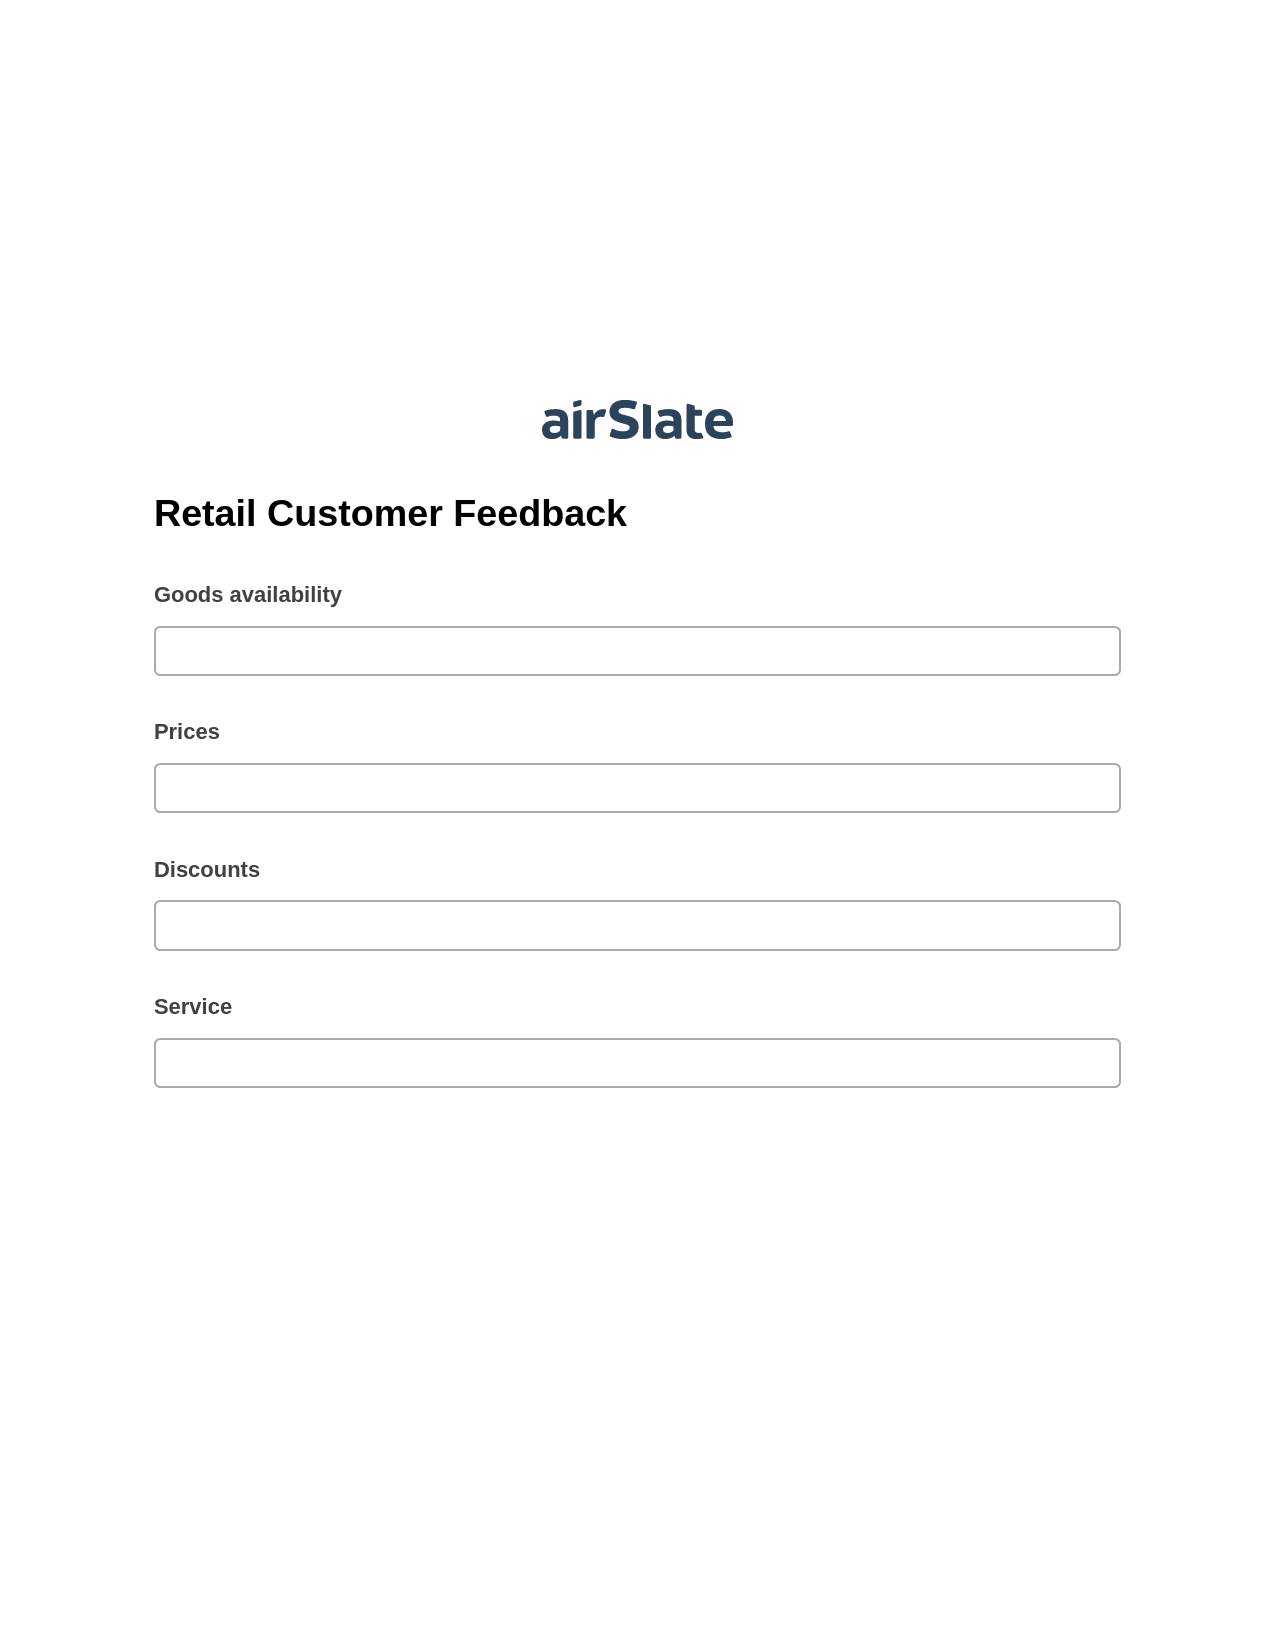 Retail Customer Feedback Pre-fill from CSV File Bot, Slack Notification Bot, OneDrive Bot